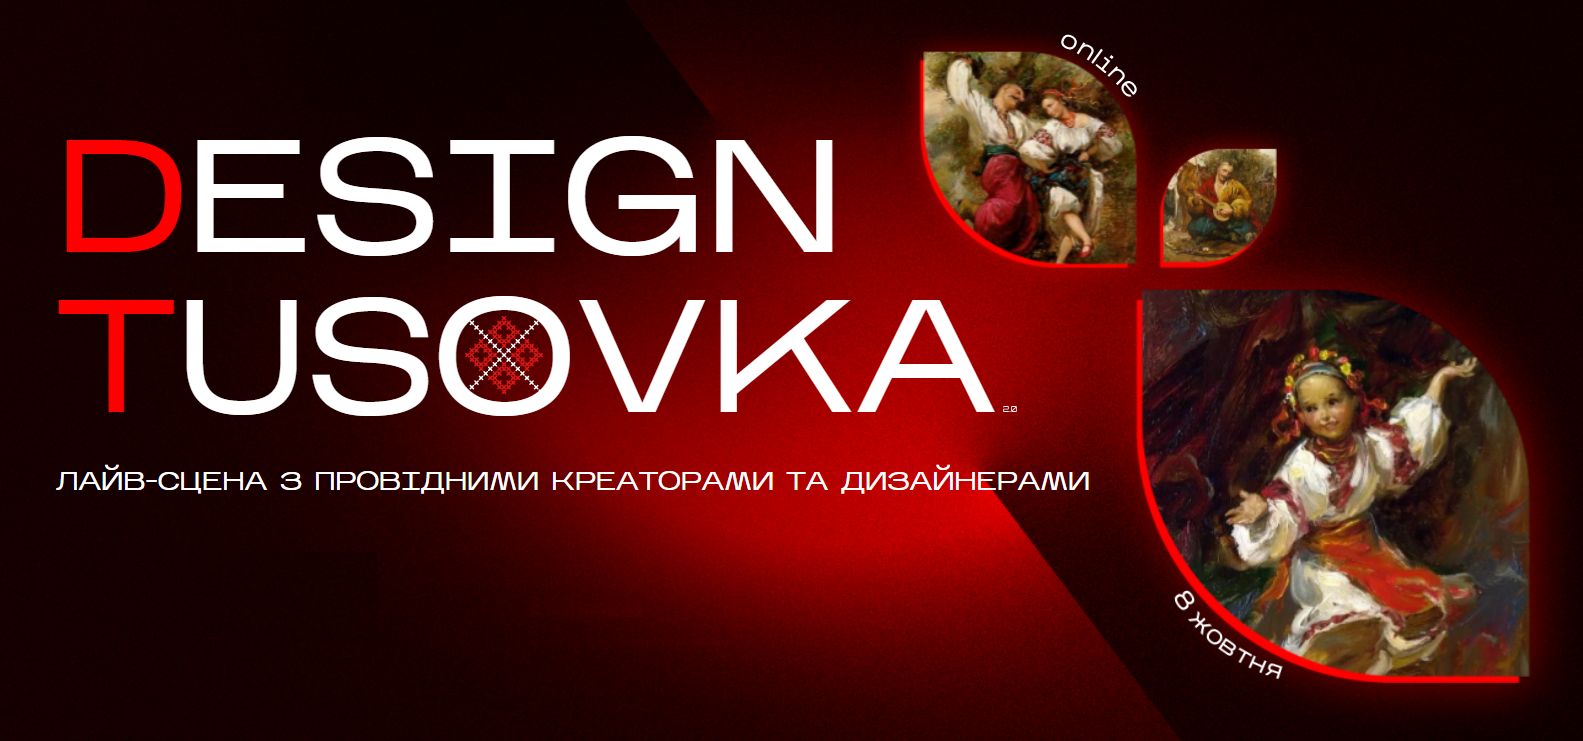 Design. Tusovka 2.0